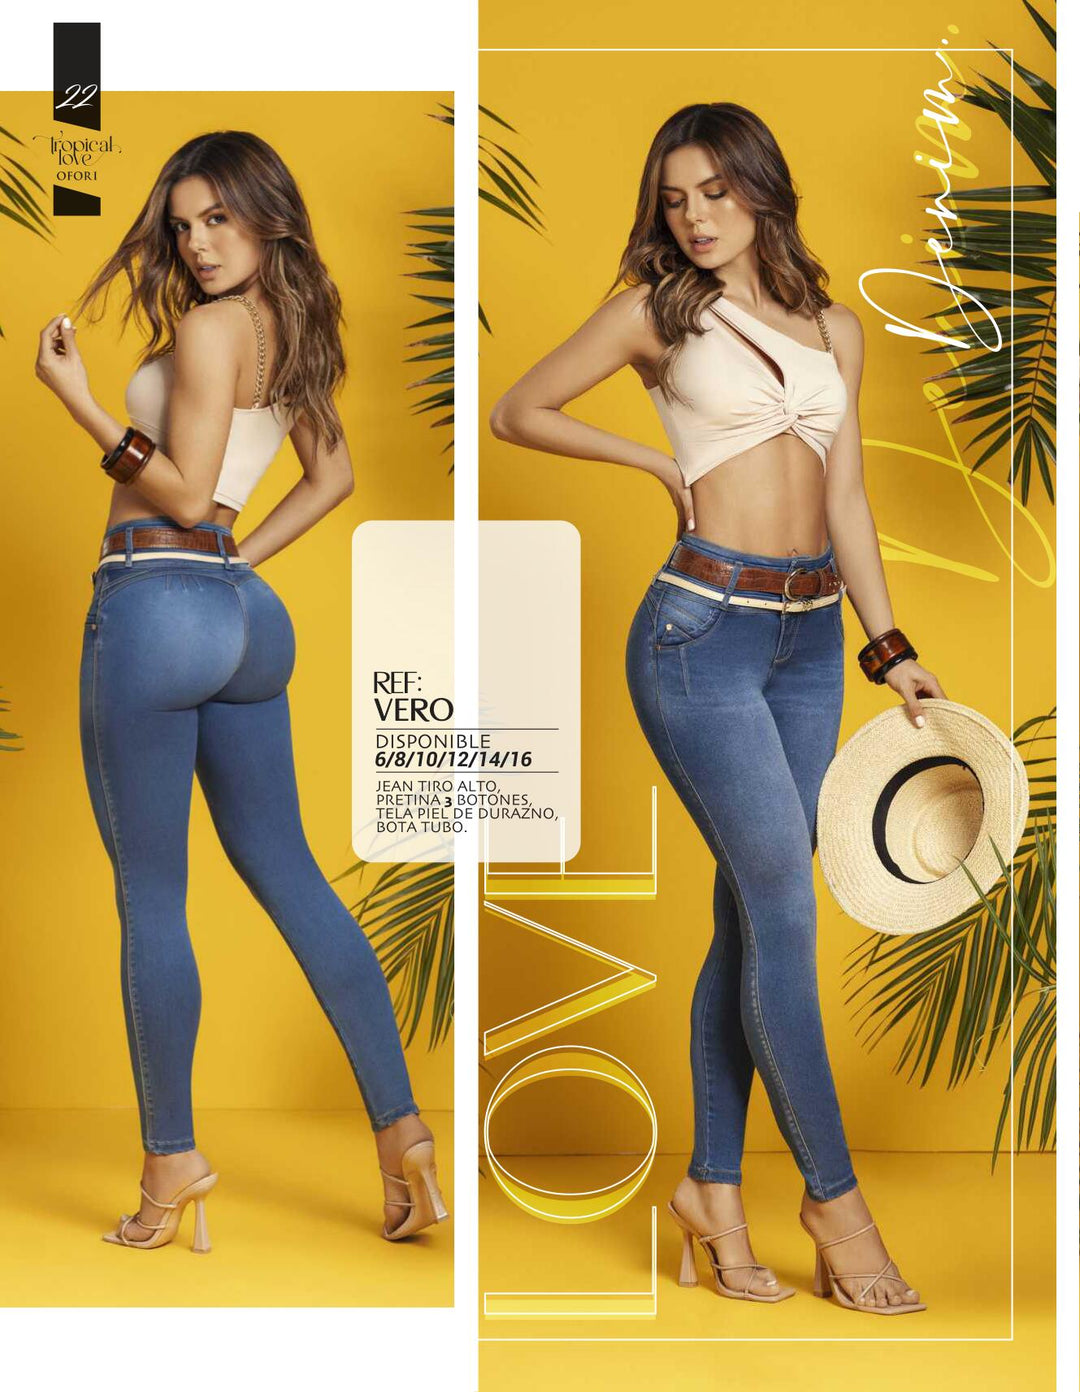 Vero 100% Authentic Colombian Push Up Jeans